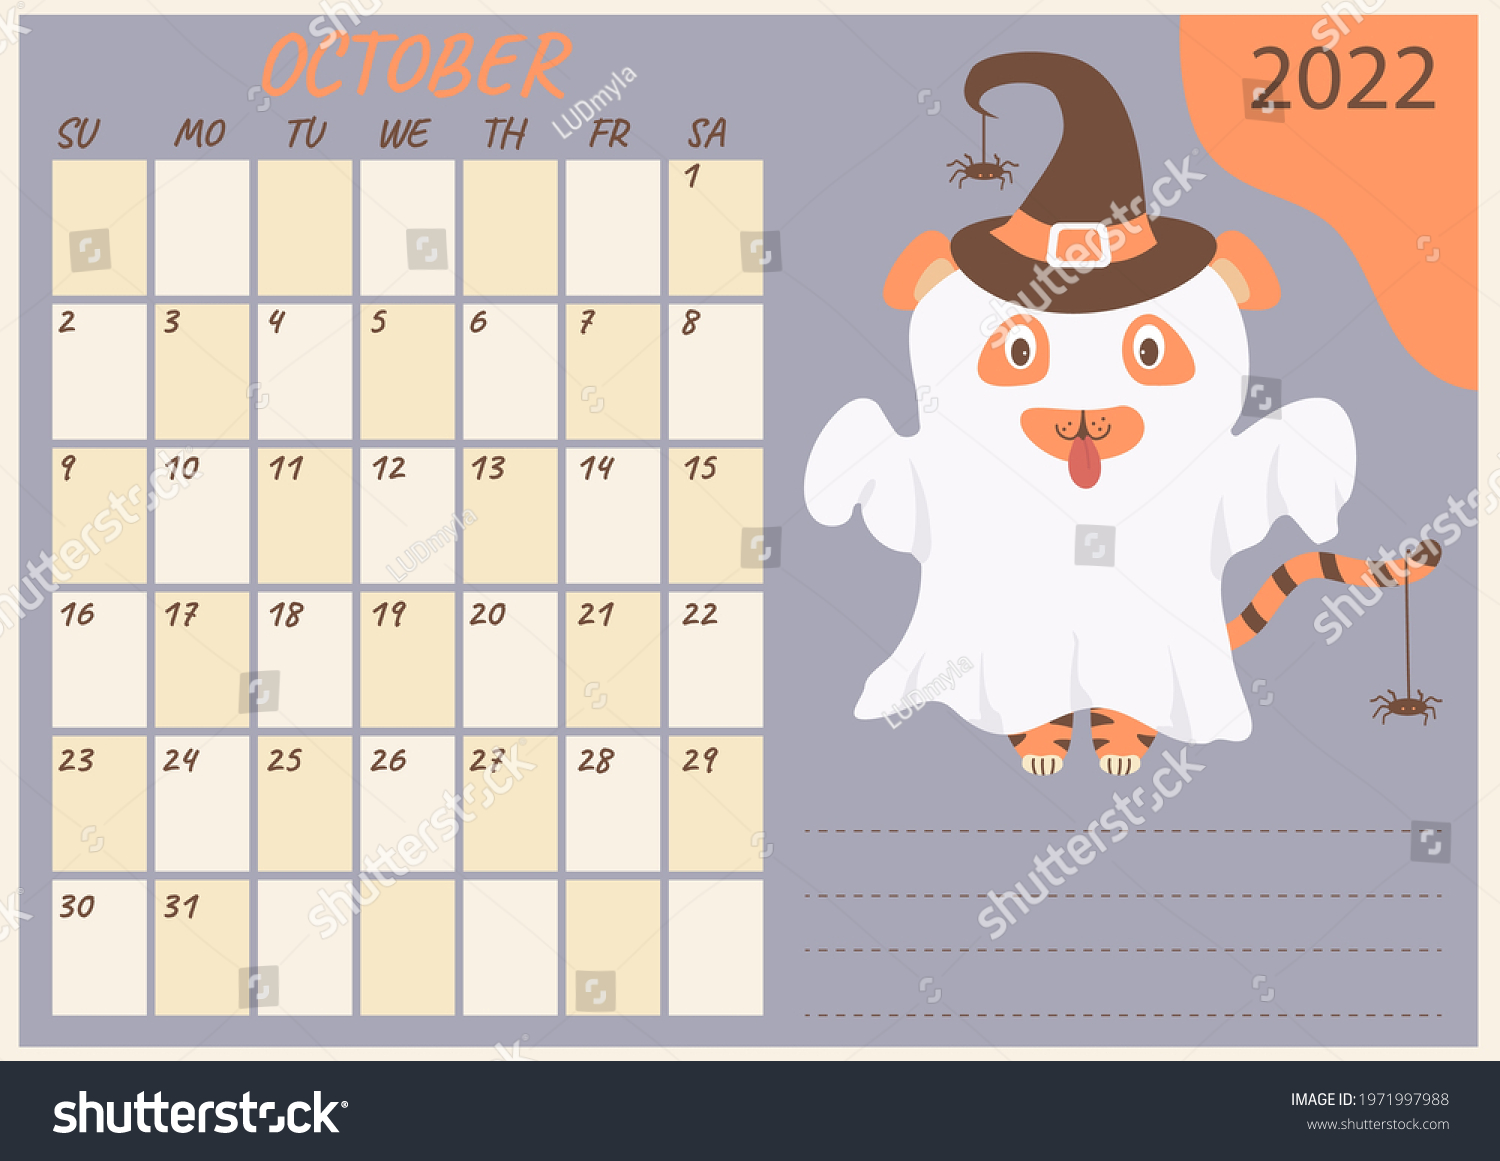 October 2022 Holiday Calendar Planner Calendar October 2022 Cute Ghost Stock Vector (Royalty Free)  1971997988